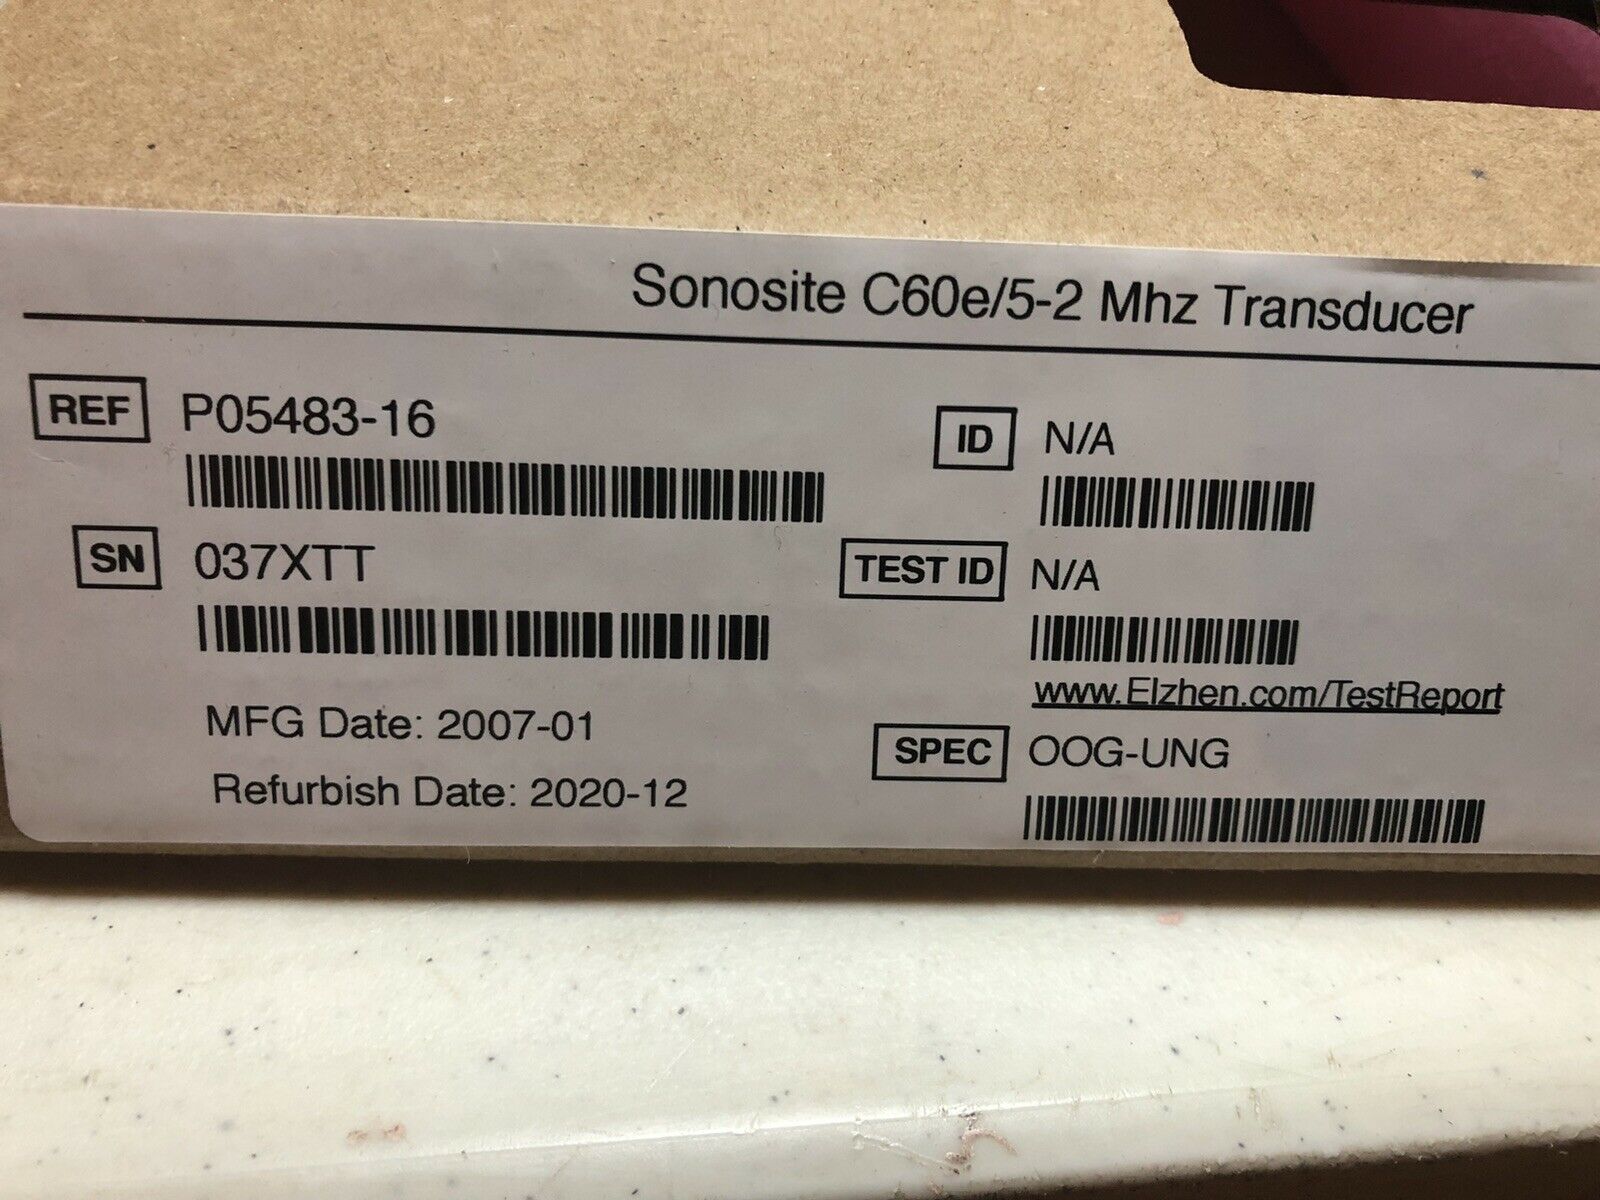 SONOSITE MICROMAXX 2007 Portable Ultrasound With C60E Transducer Probe . Refurbi DIAGNOSTIC ULTRASOUND MACHINES FOR SALE